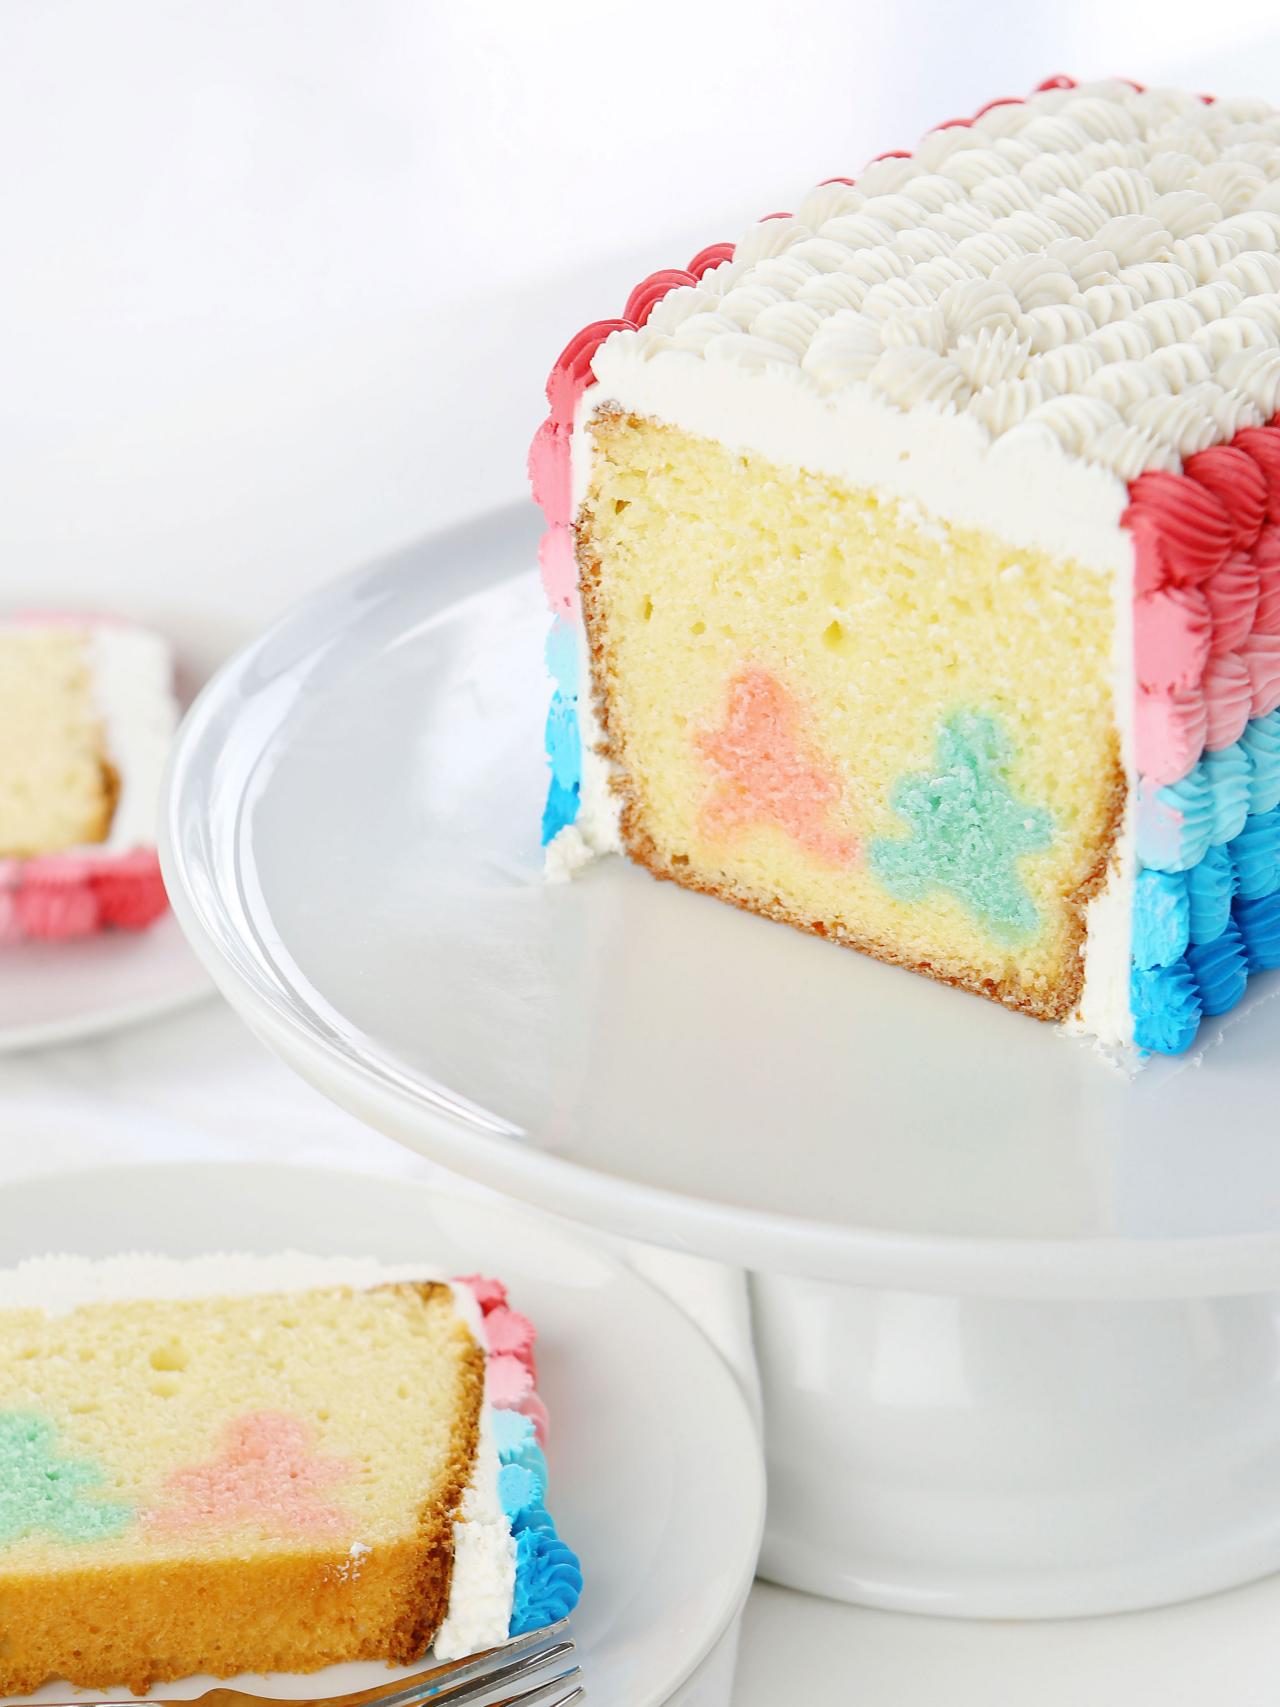 Ileana D'Cruz Shares Sneak Peek Of Her 'Preggy Perks', Reveals Gorging On  Cake To Satisfy Her Cravings